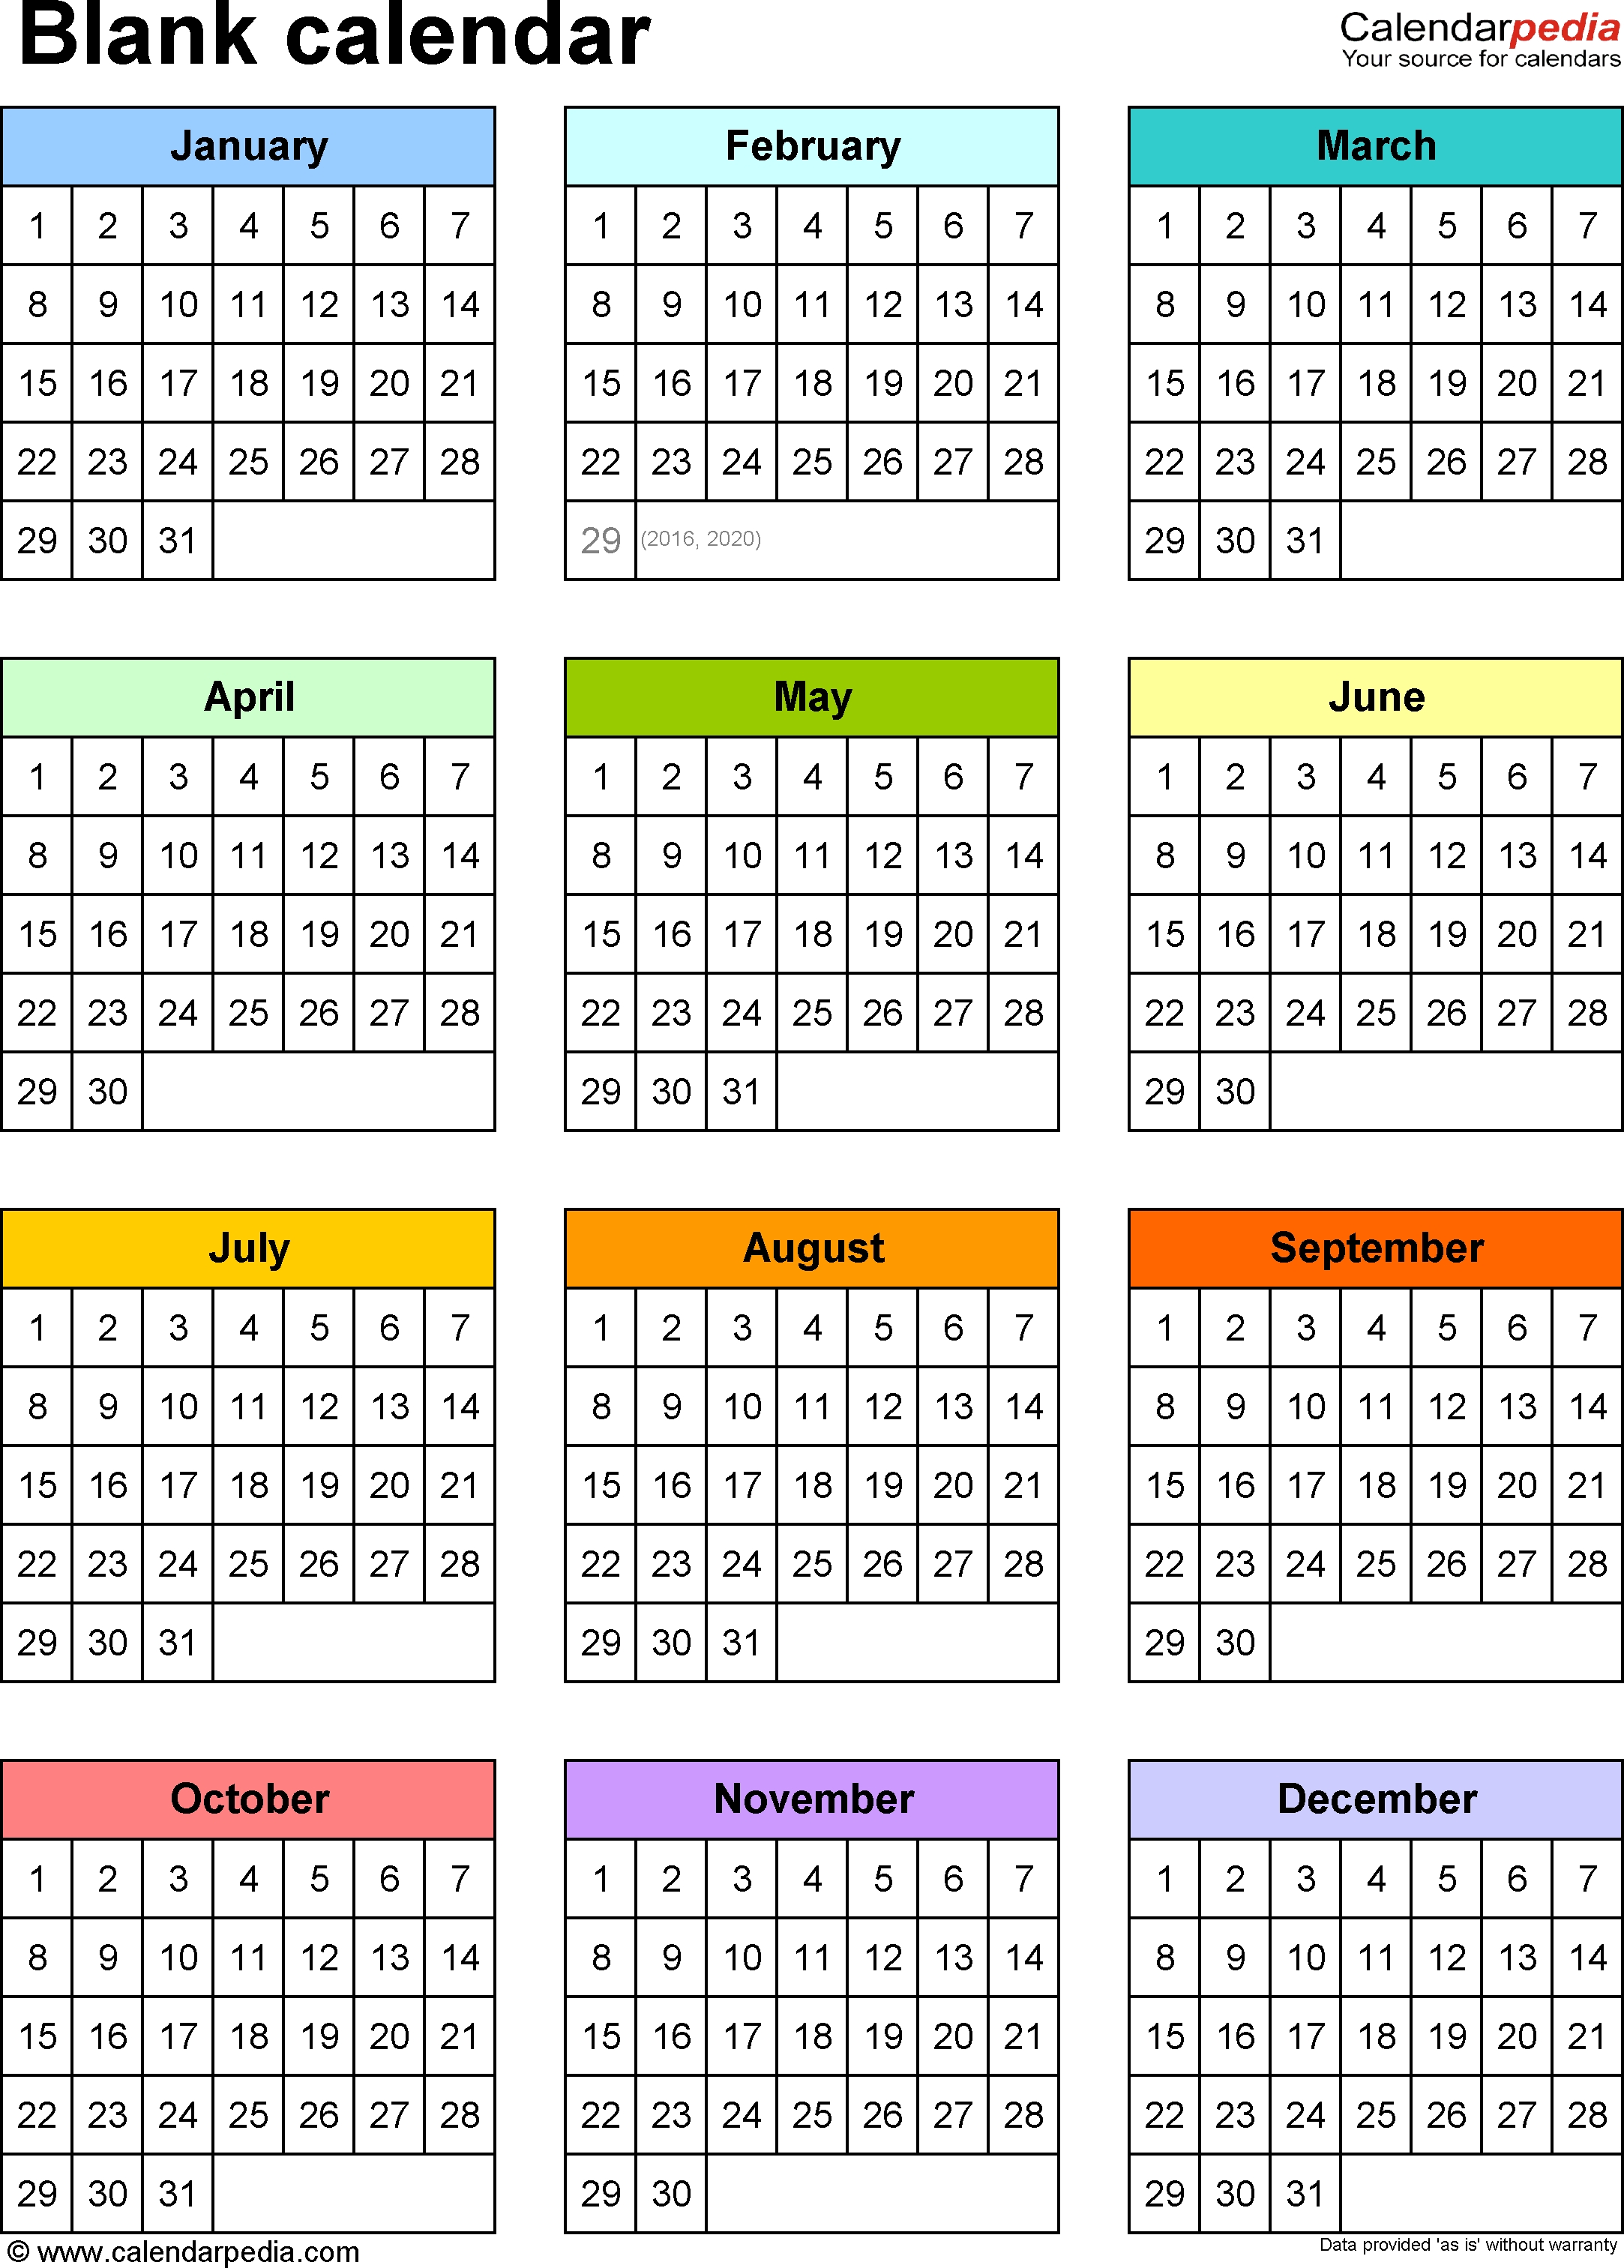 Blank Calendar - 9 Free Printable Microsoft Word Templates pertaining to Year Calendar At A Glance